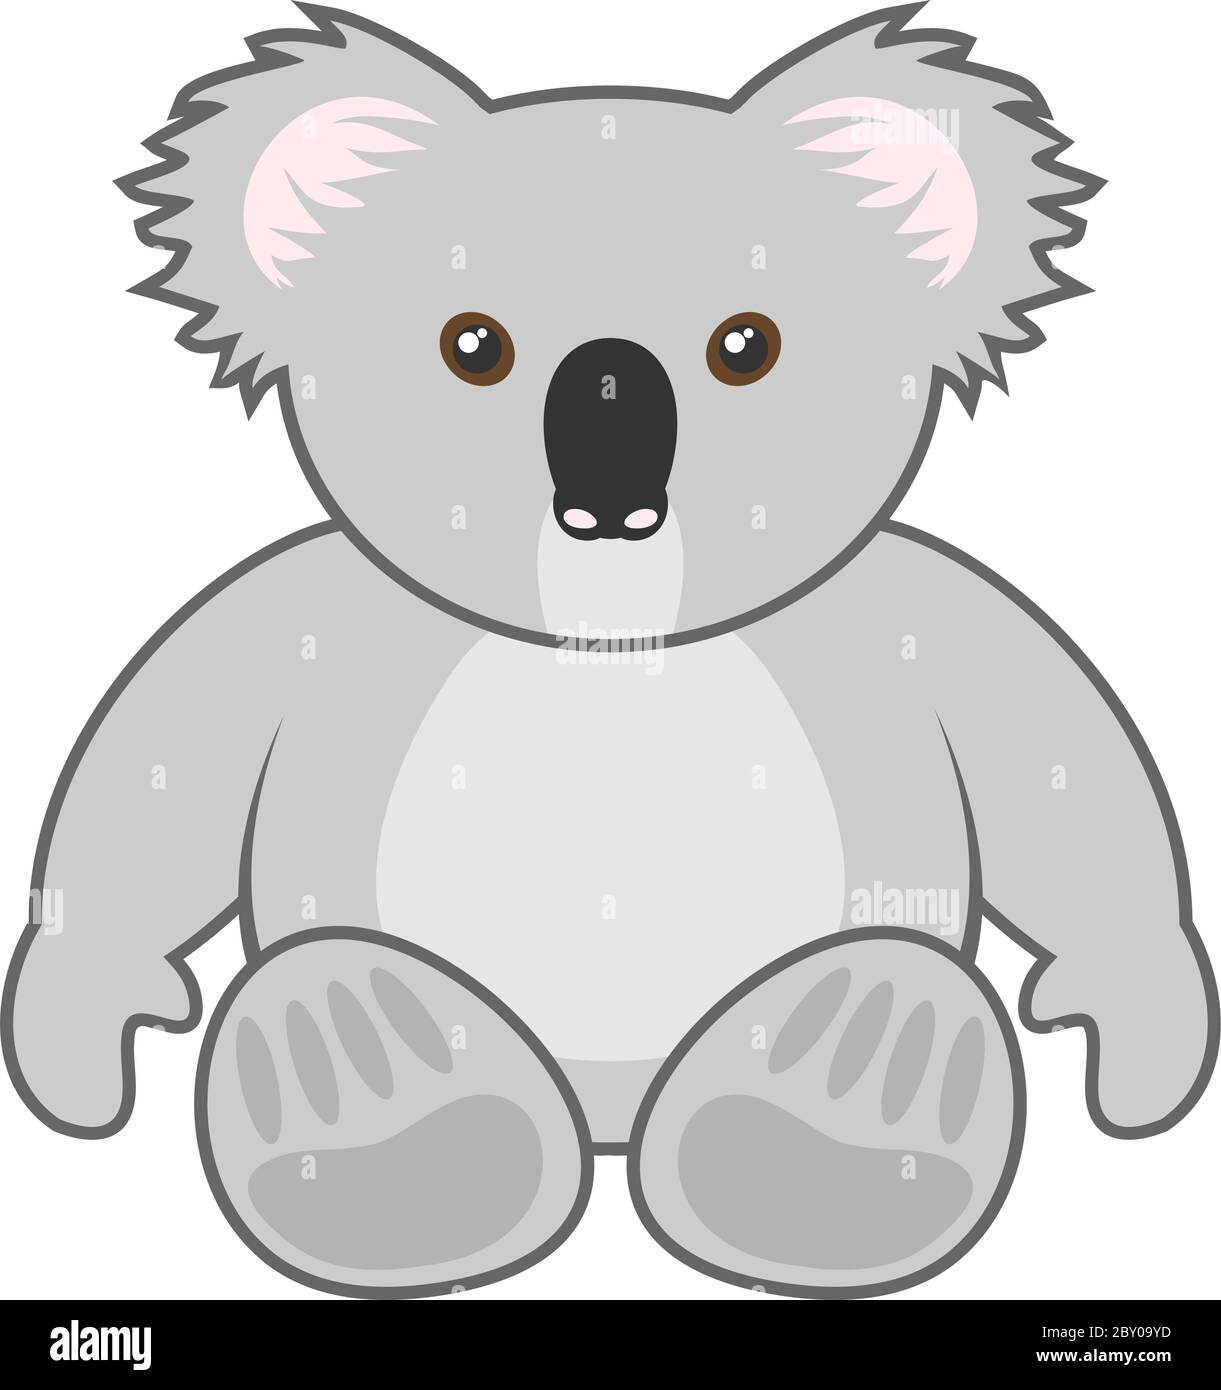 Koala drawing Stock Vector Images - Alamy